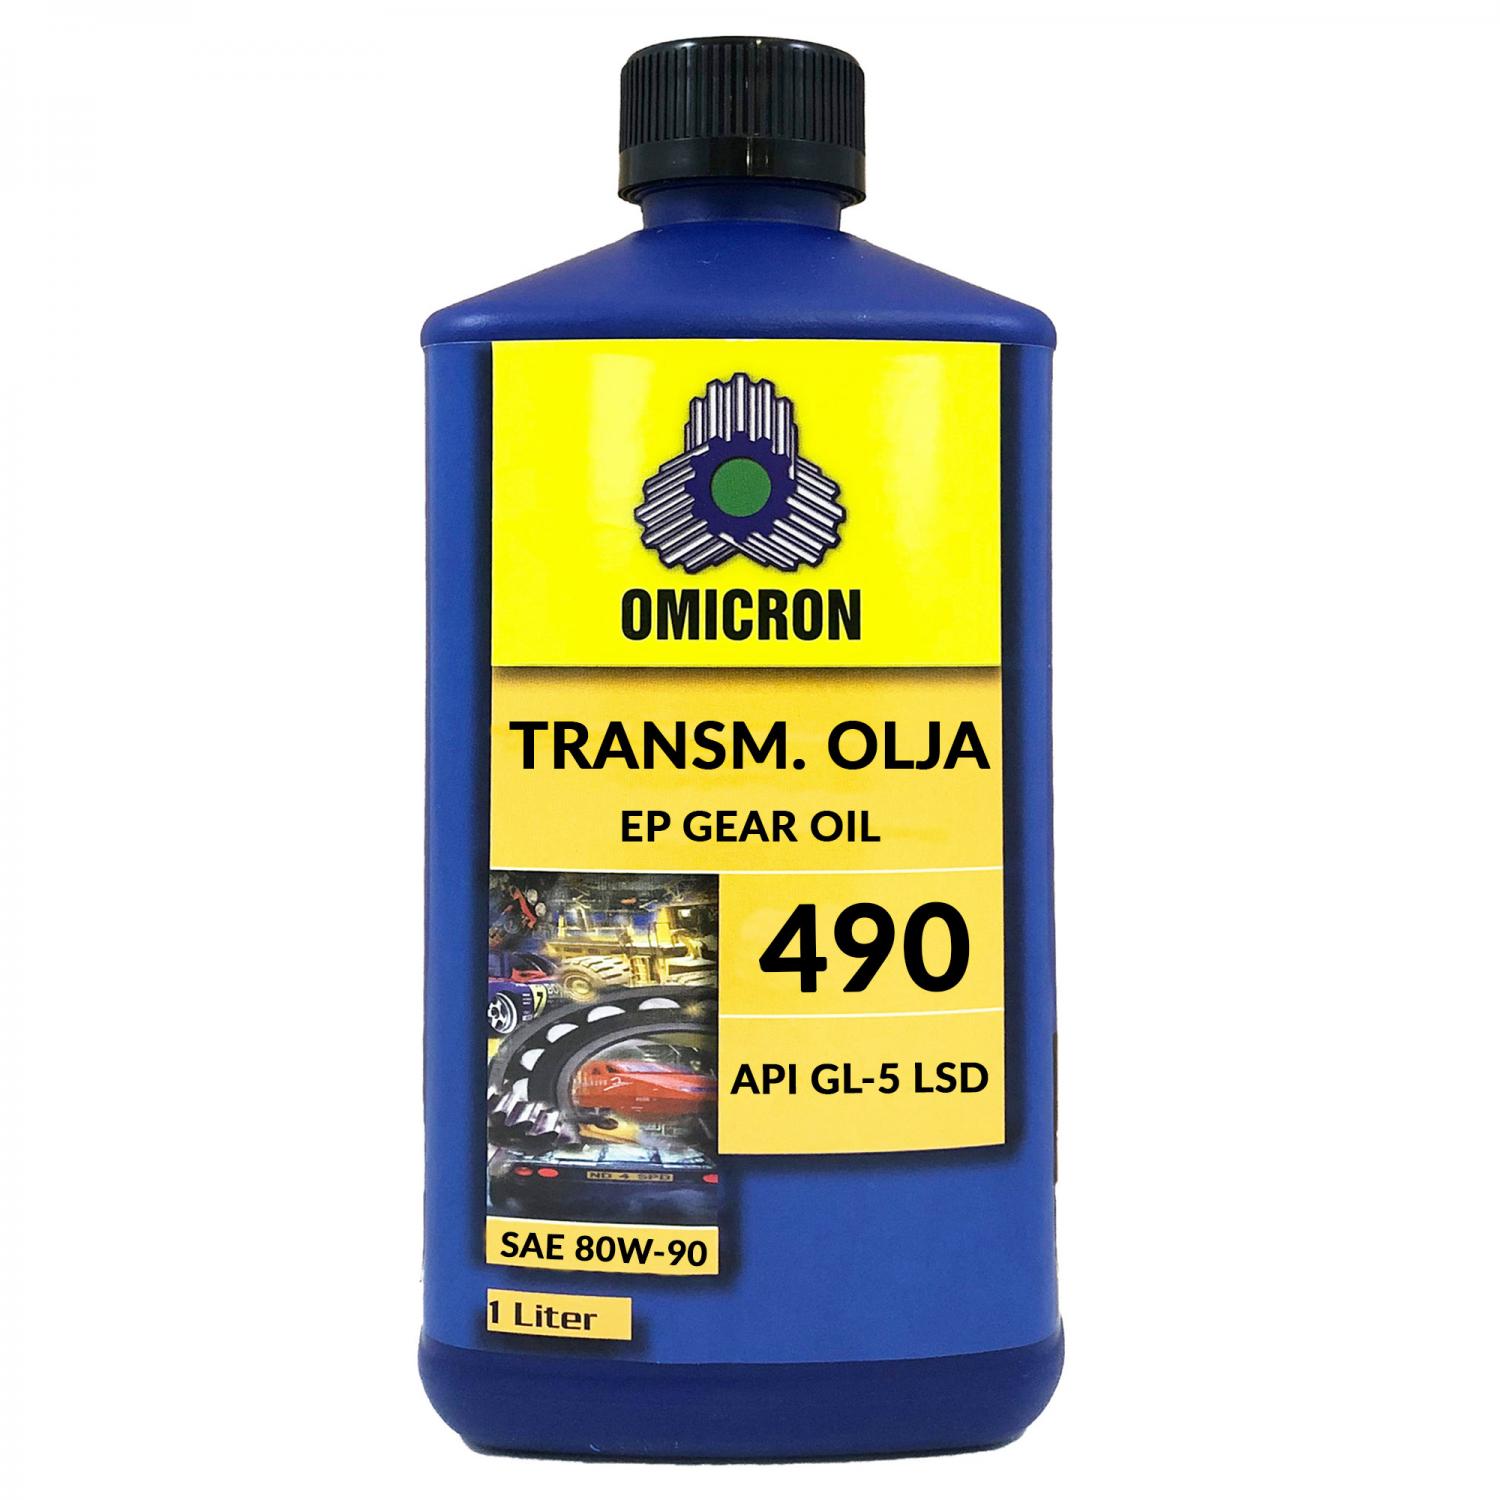 Omicron 490 SAE 80W-90 Transmissionsolja API GL...